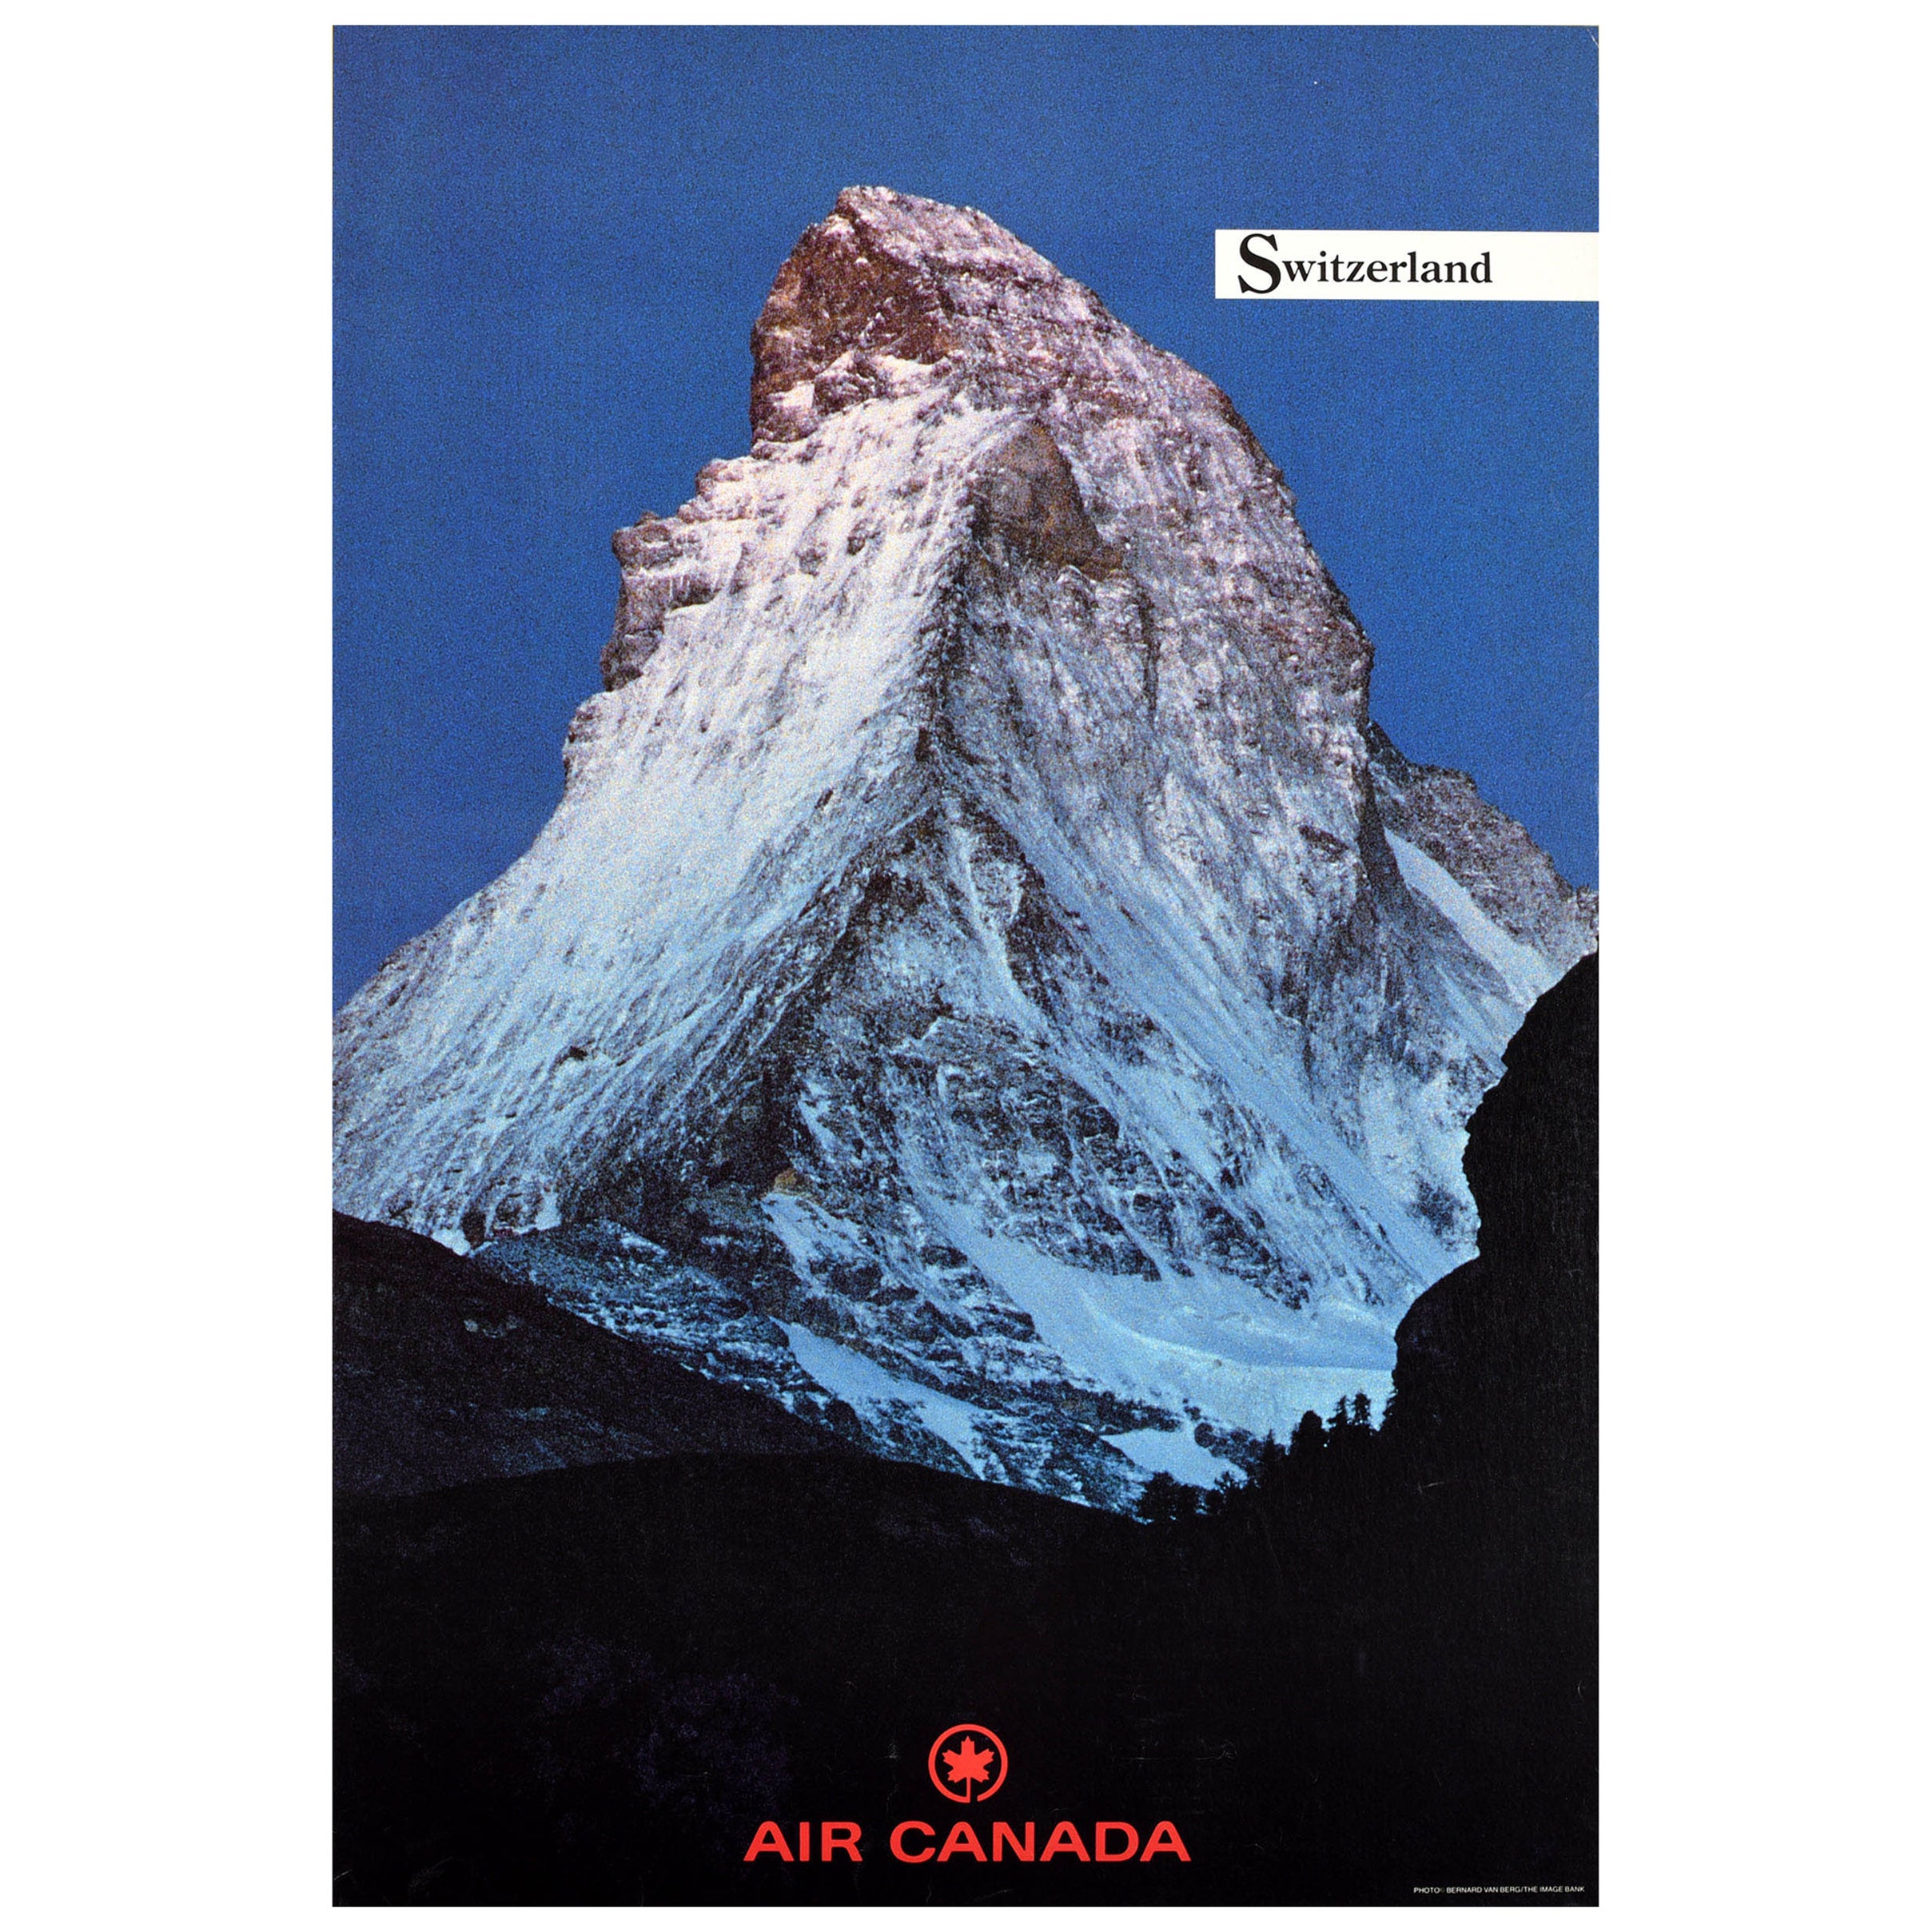 Original Vintage Travel Poster Switzerland Air Canada Zermatt Matterhorn Alps